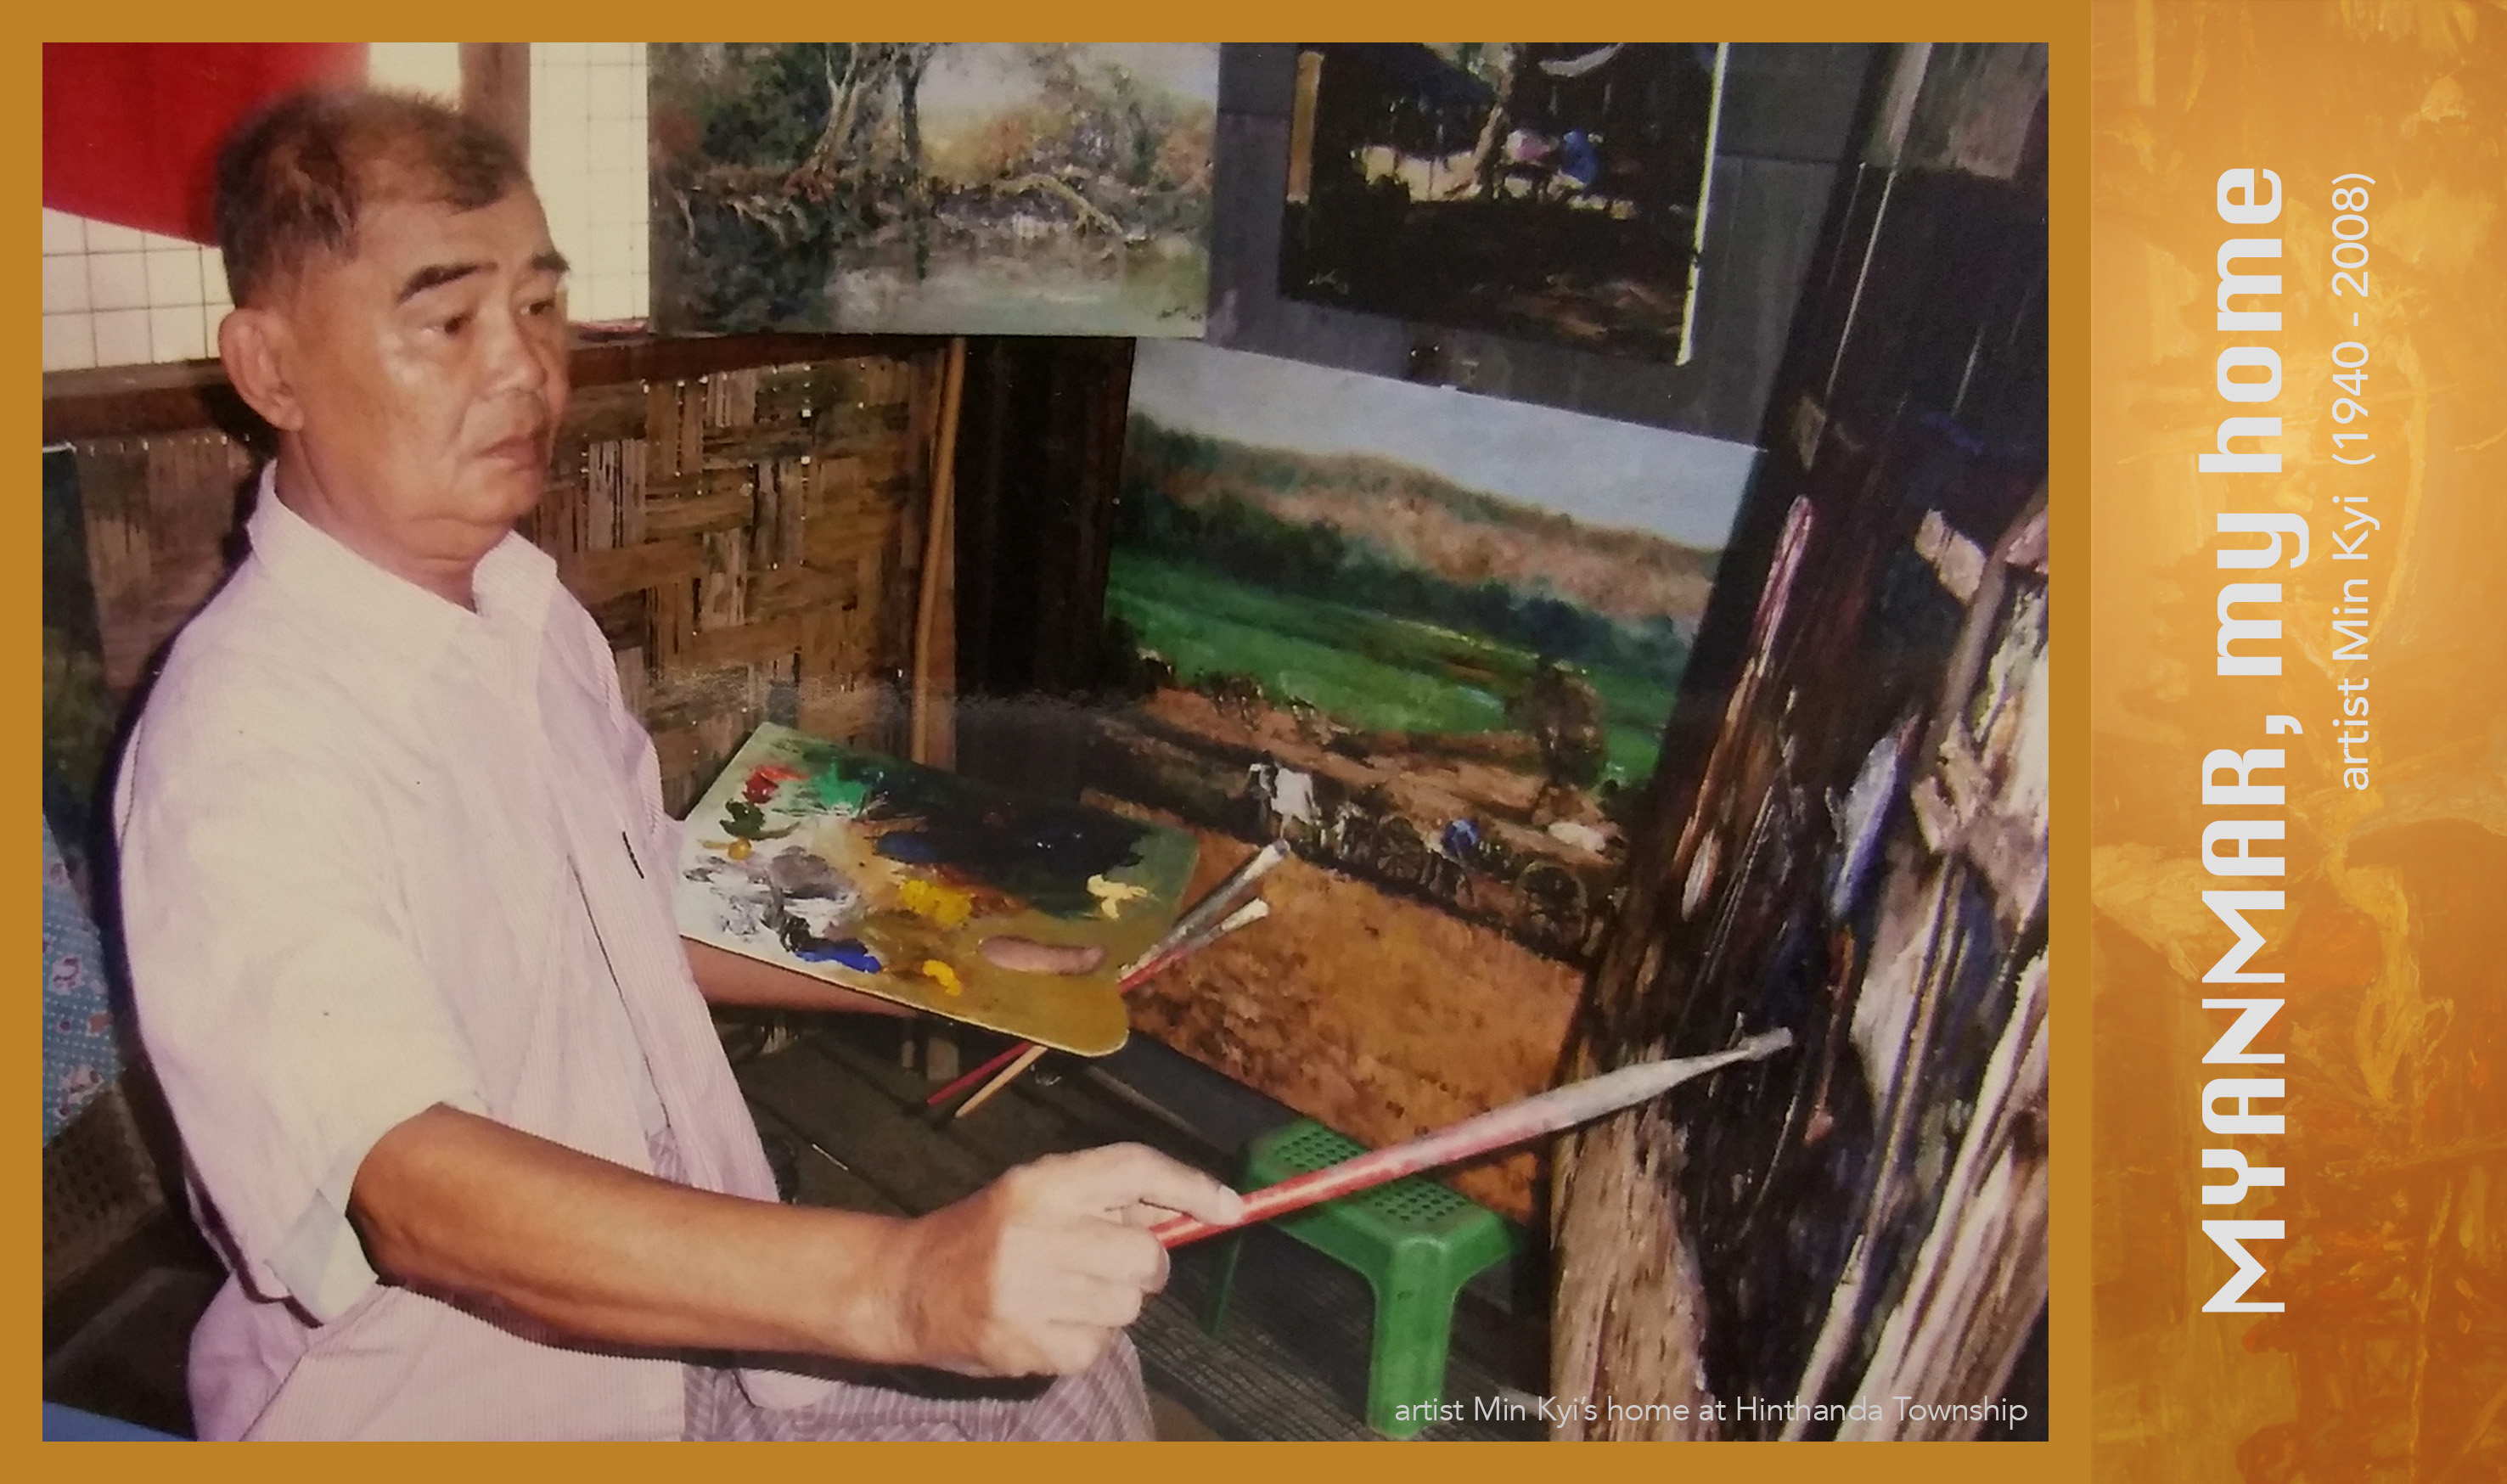 Artist Min Kyi (1940 - 2008)